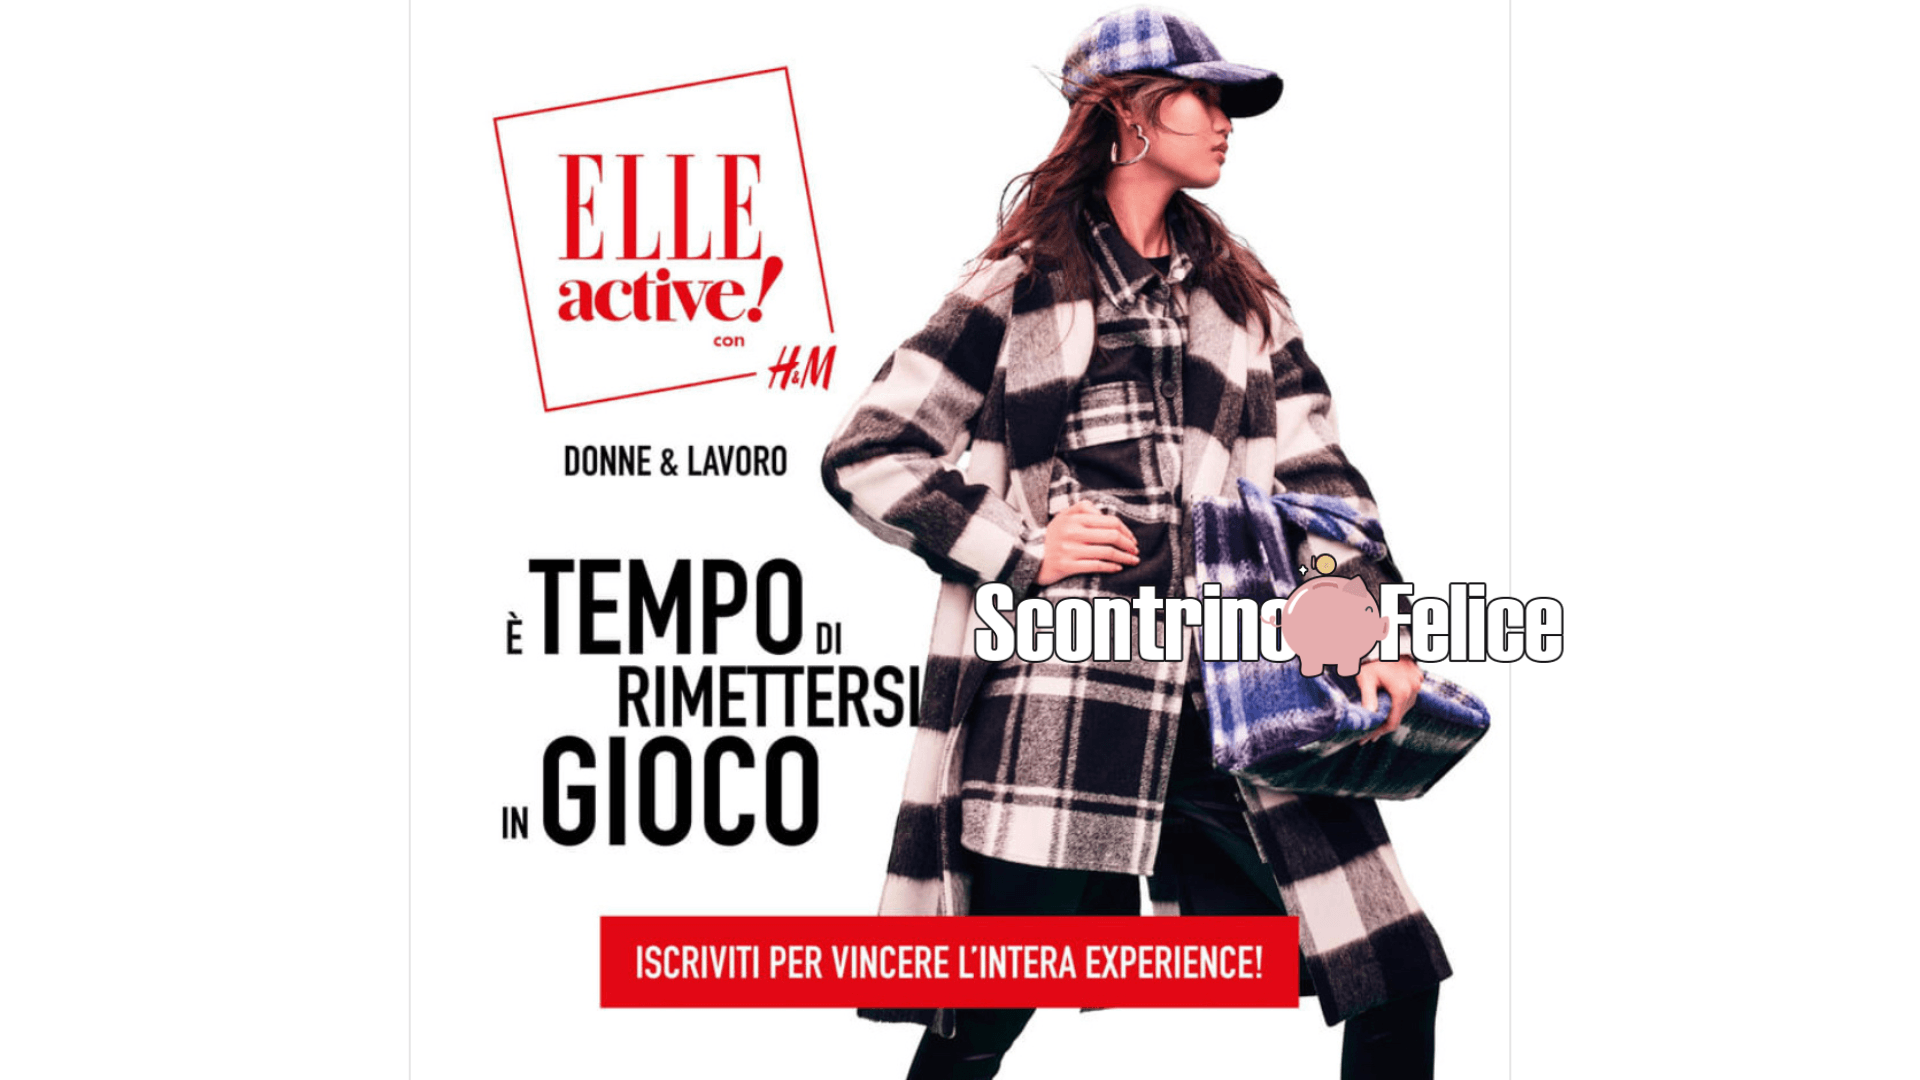 Vinci un weekend per 2 persone a Milano per partecipare a Elle active 9